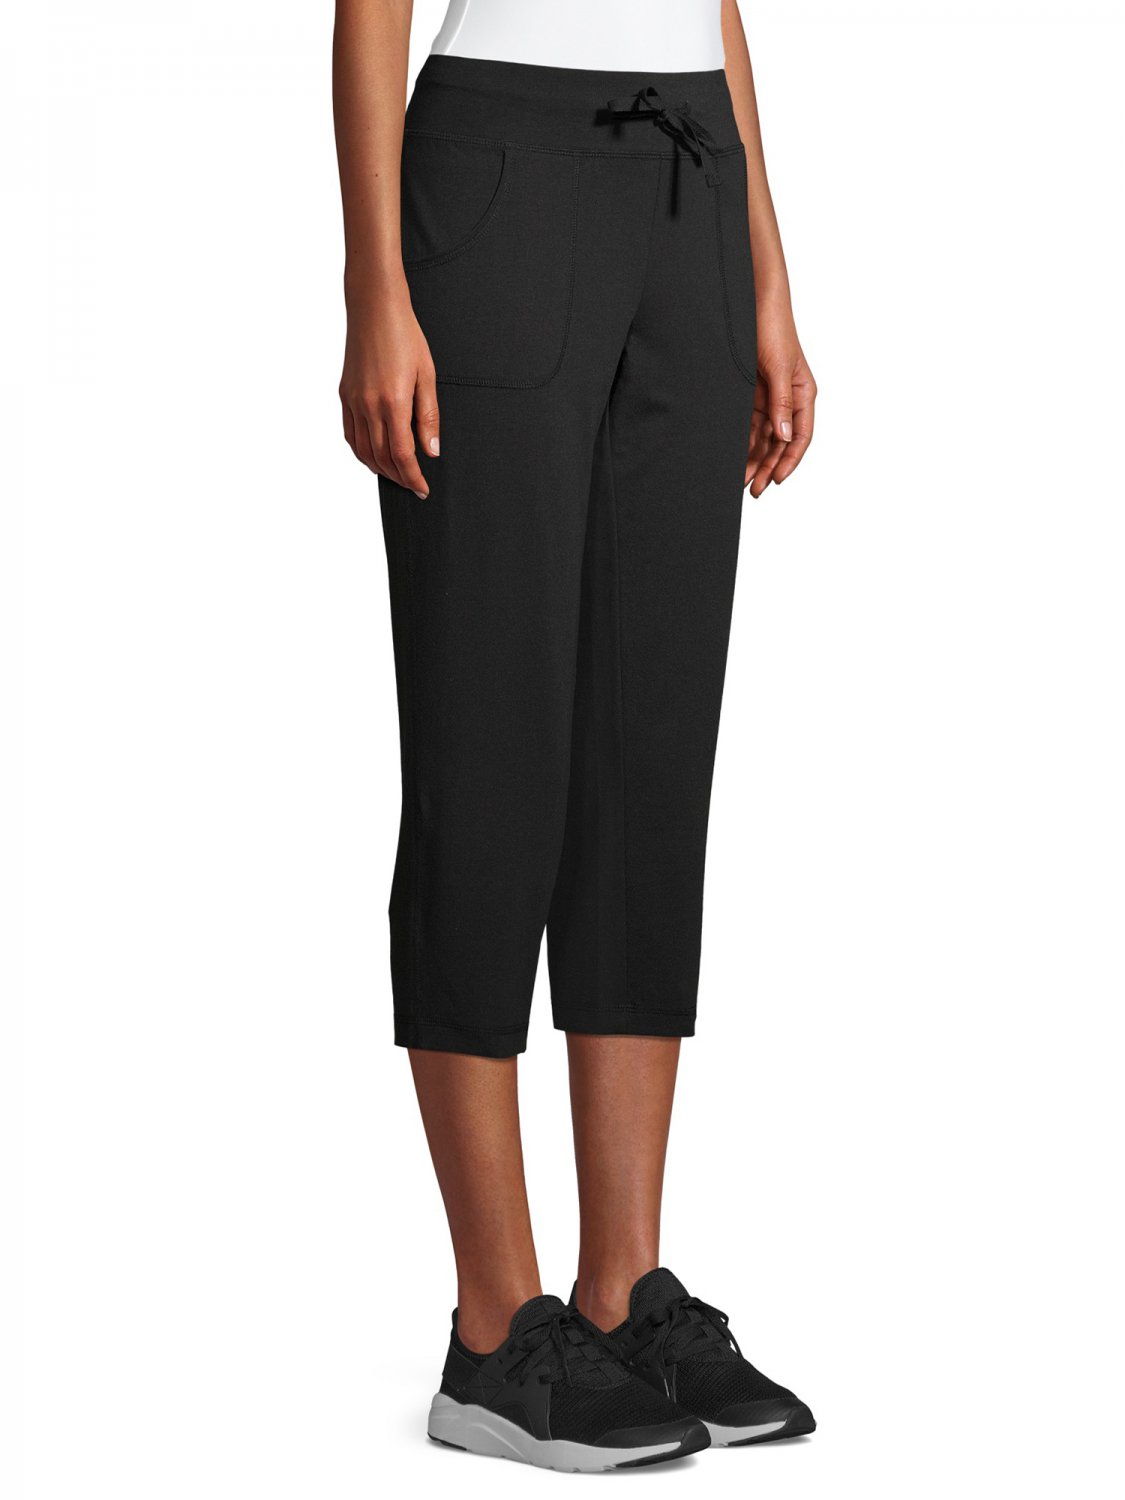 Athletic Works Women's Athleisure Knit Capri Pants Black Size Large 12 ...